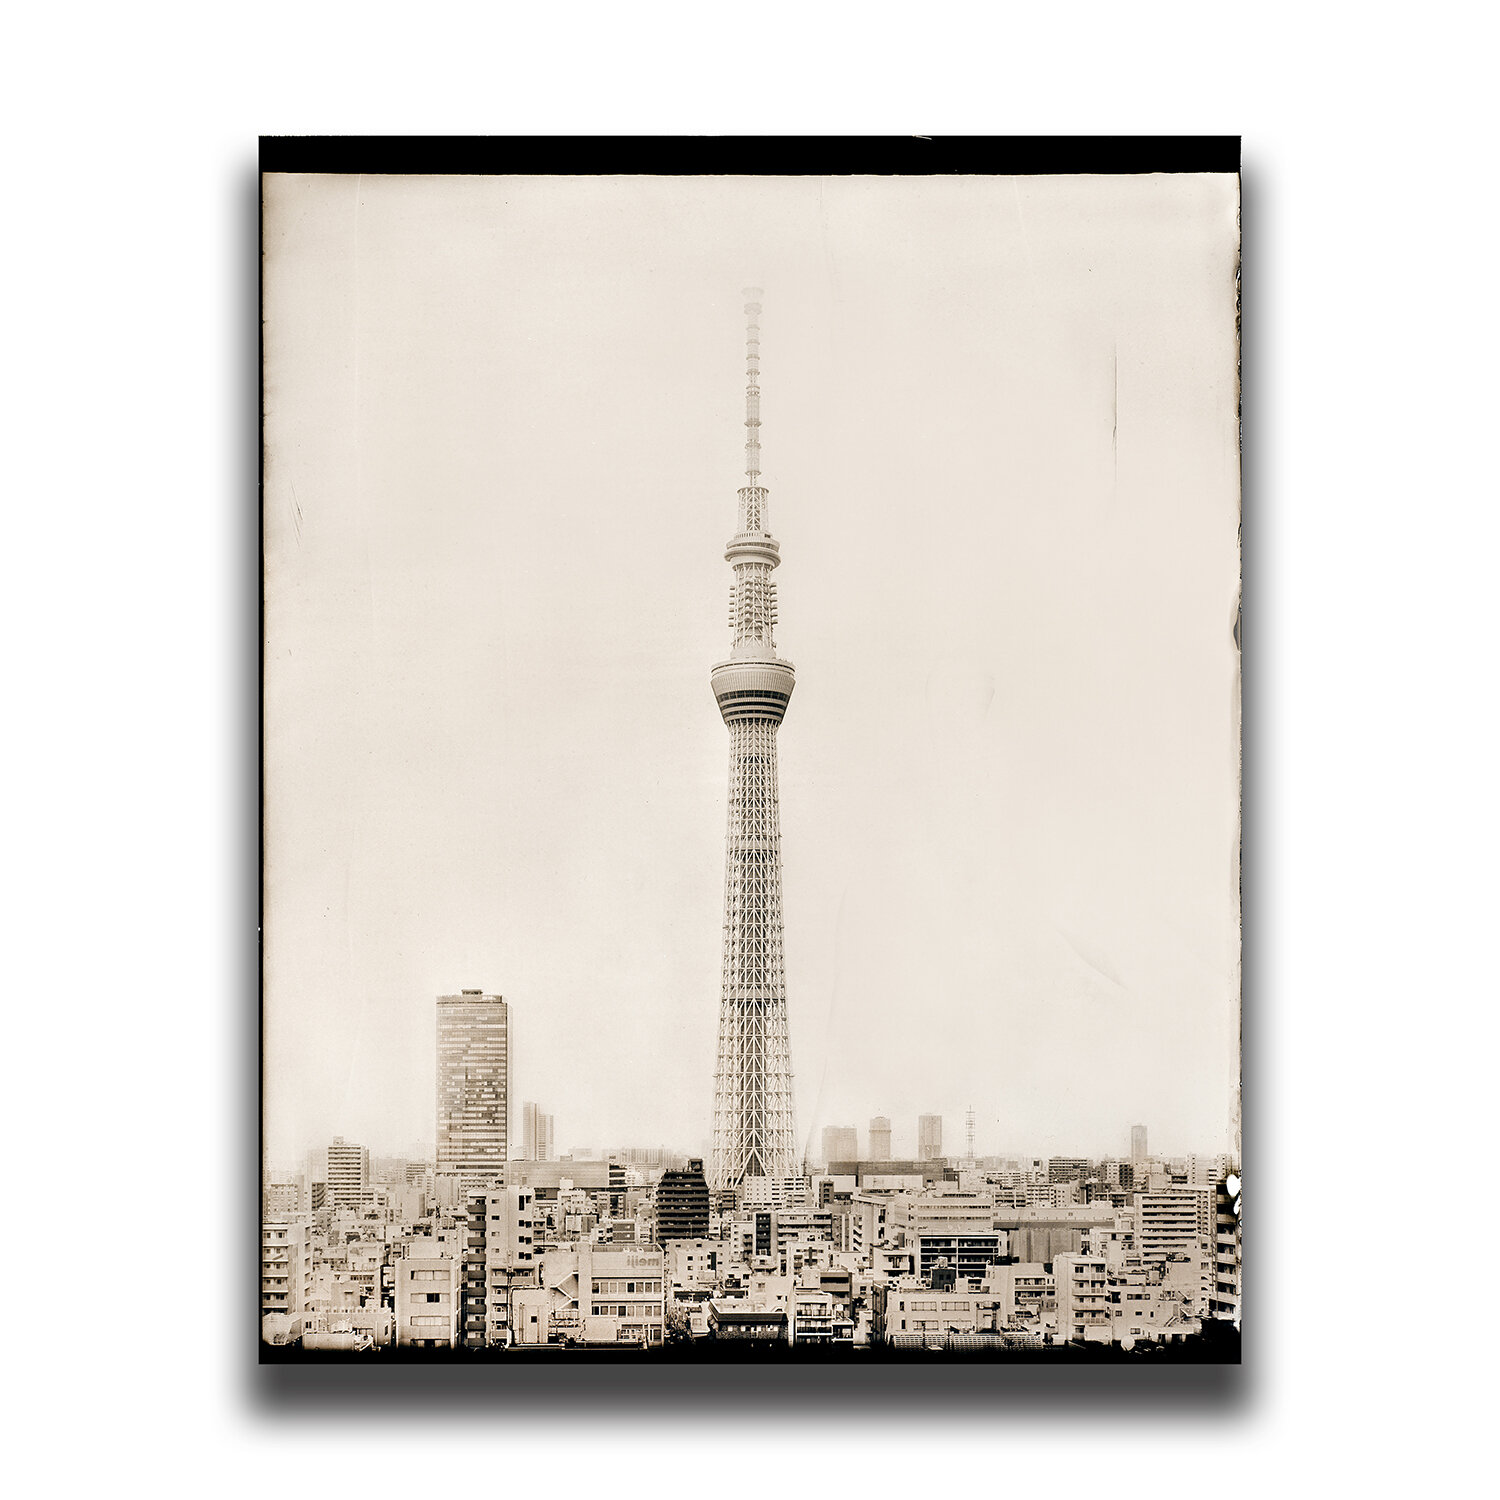 Tokyo Skytree/#東京スカイツリー/도쿄 스카이트리/東京晴空塔